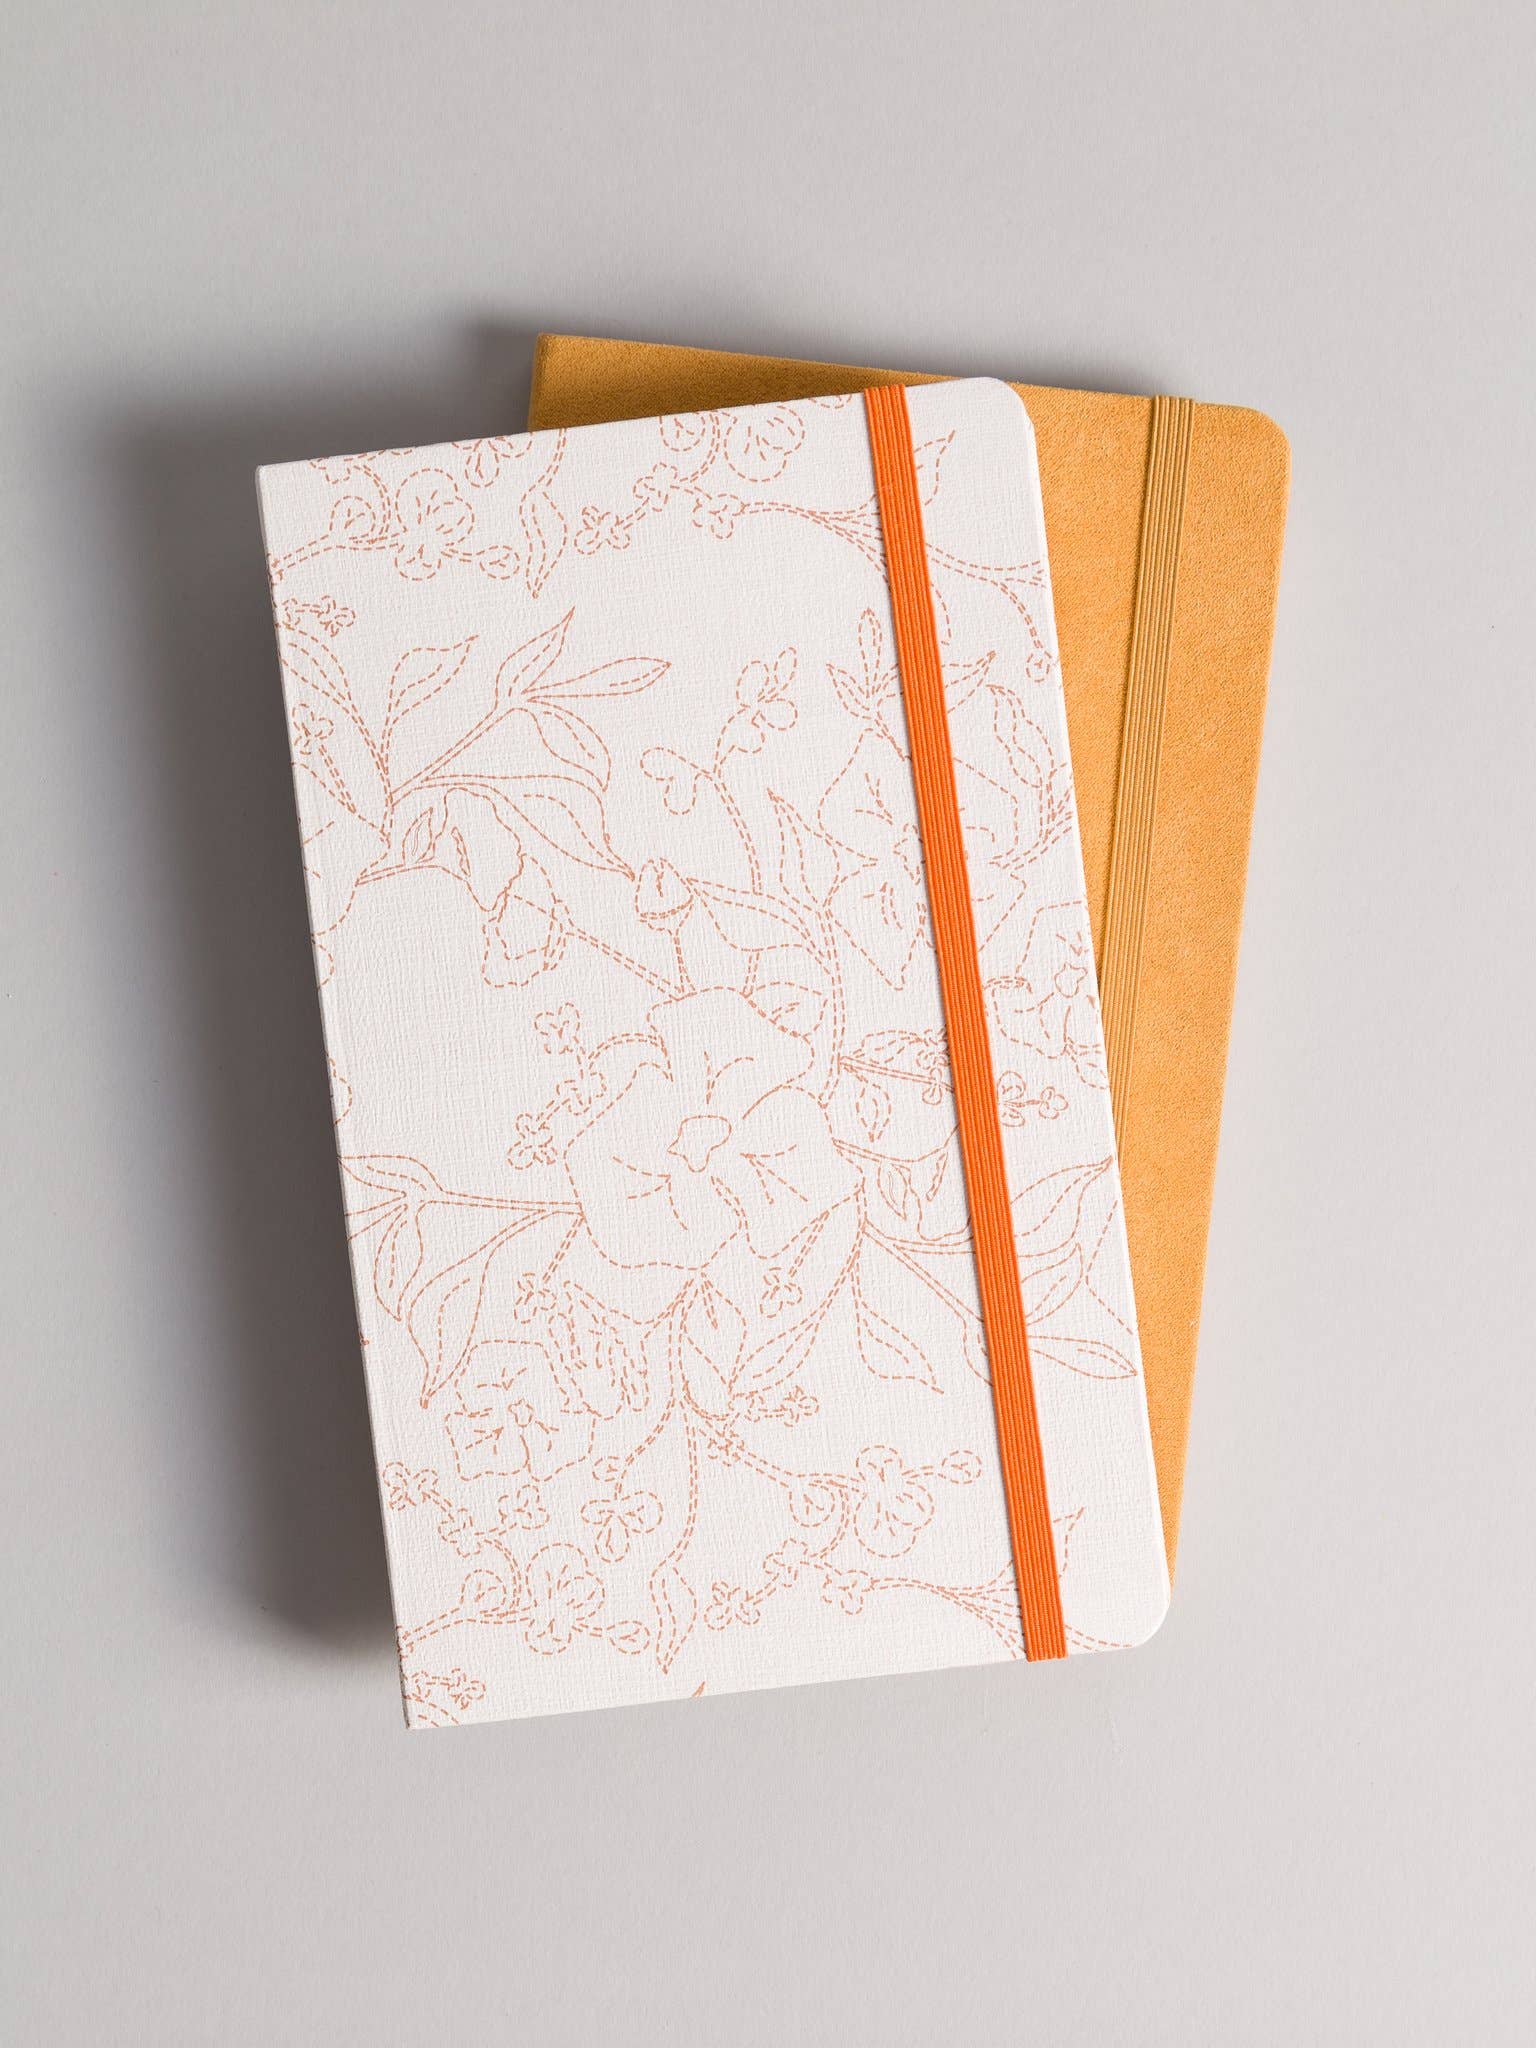 Fresh Foliage Textured Hardcover Journals - Set of 2